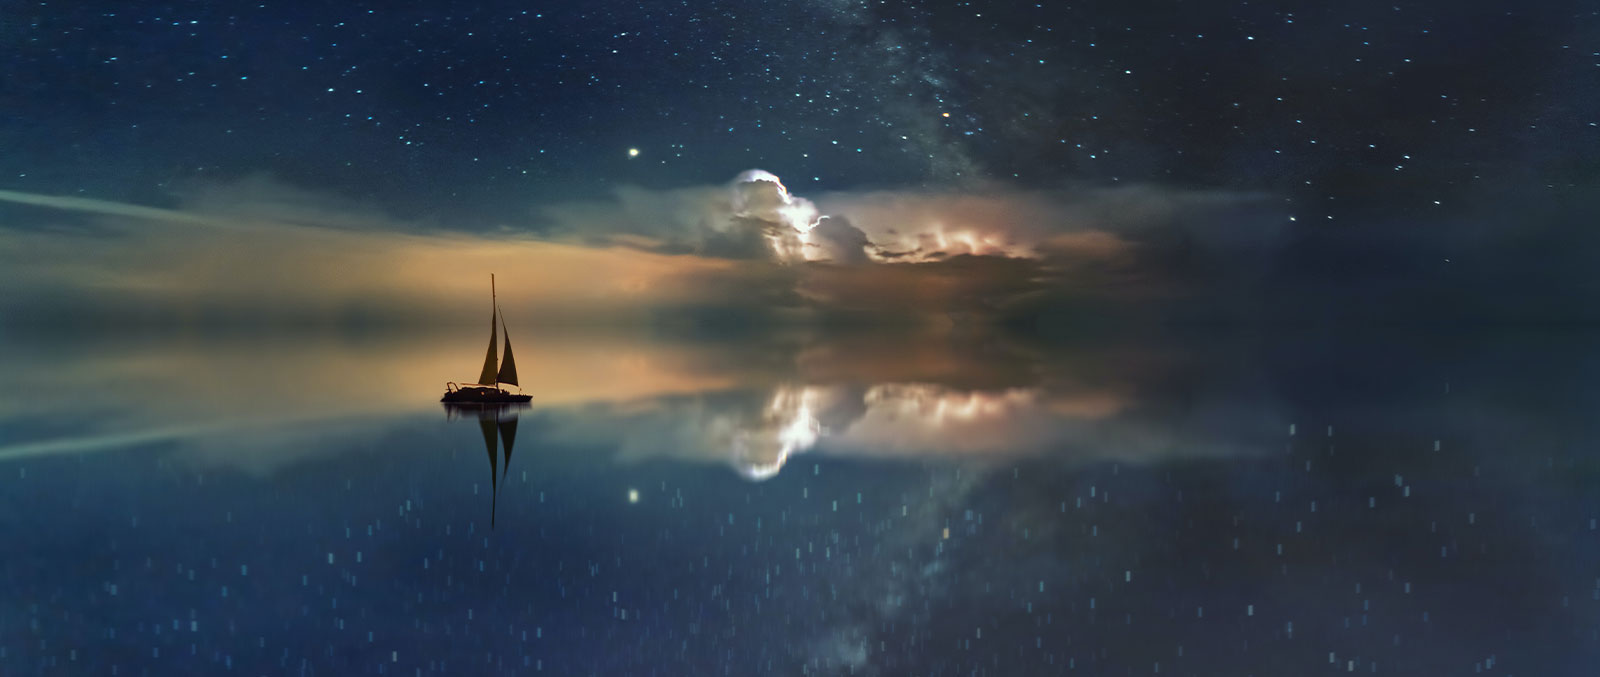 a beautiful night scene with boat